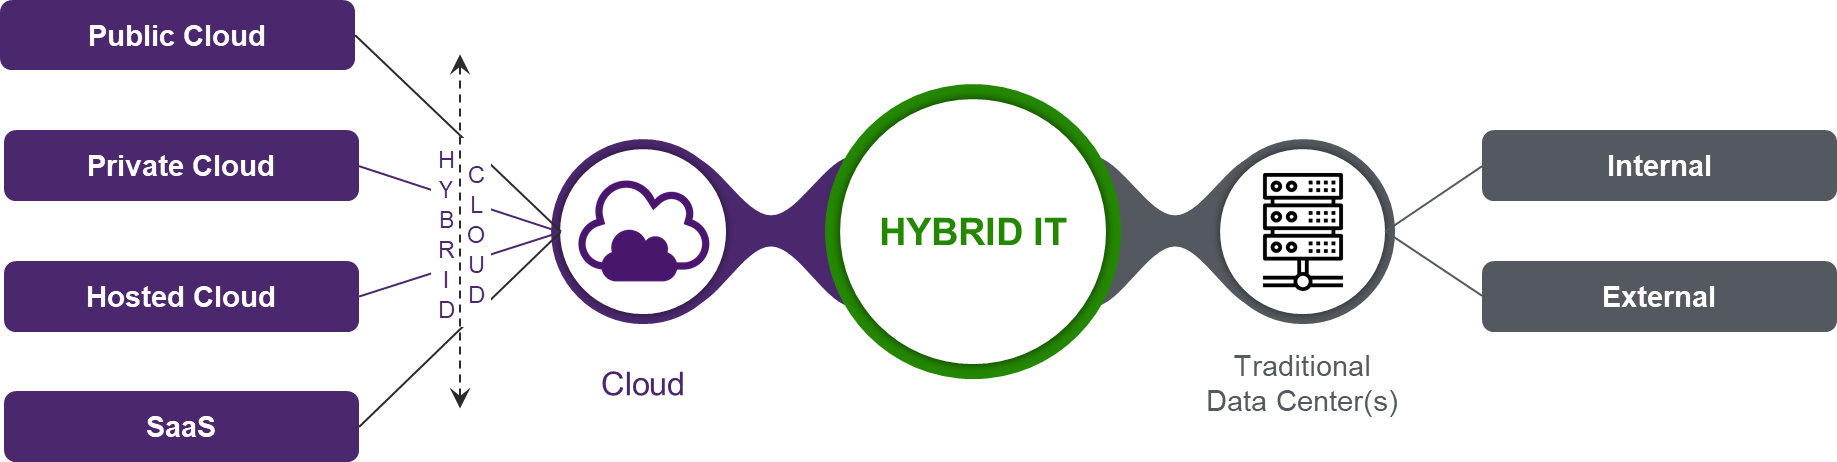 hybrid IT diagram